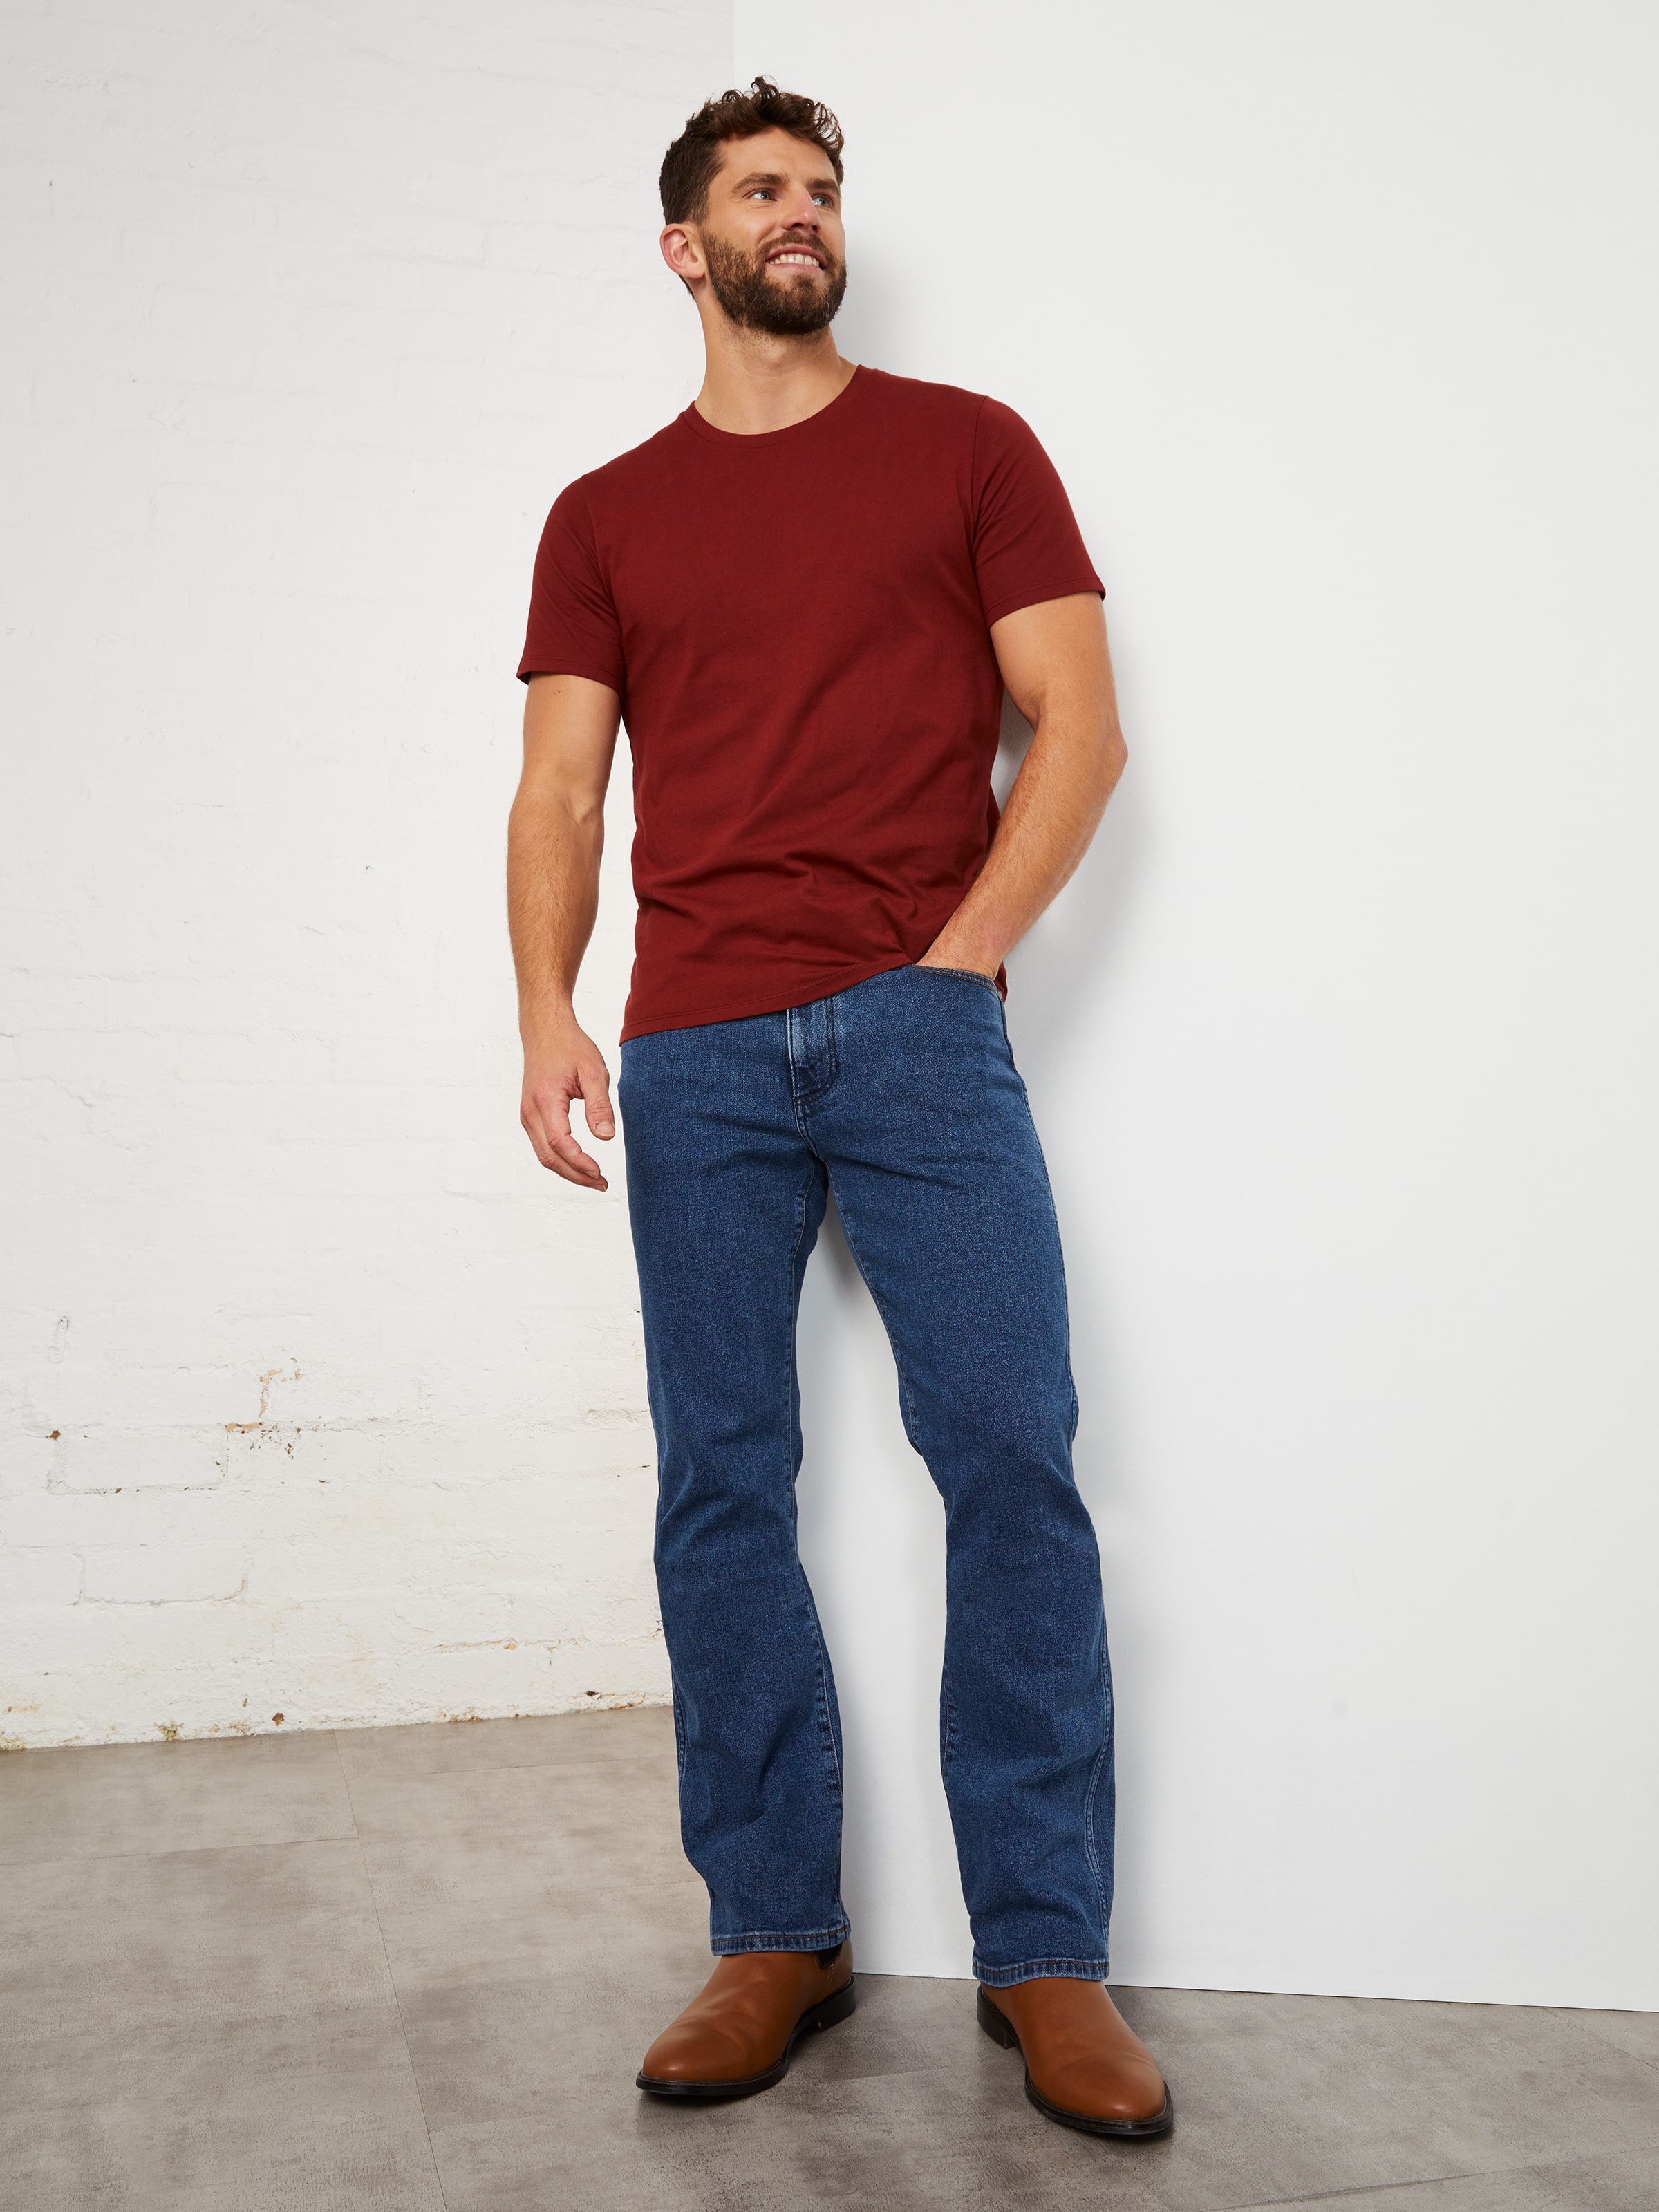 Mens Flared Bell Bottom Pants Business Smart Bootcut Trousers Slim Plain  Formal | eBay